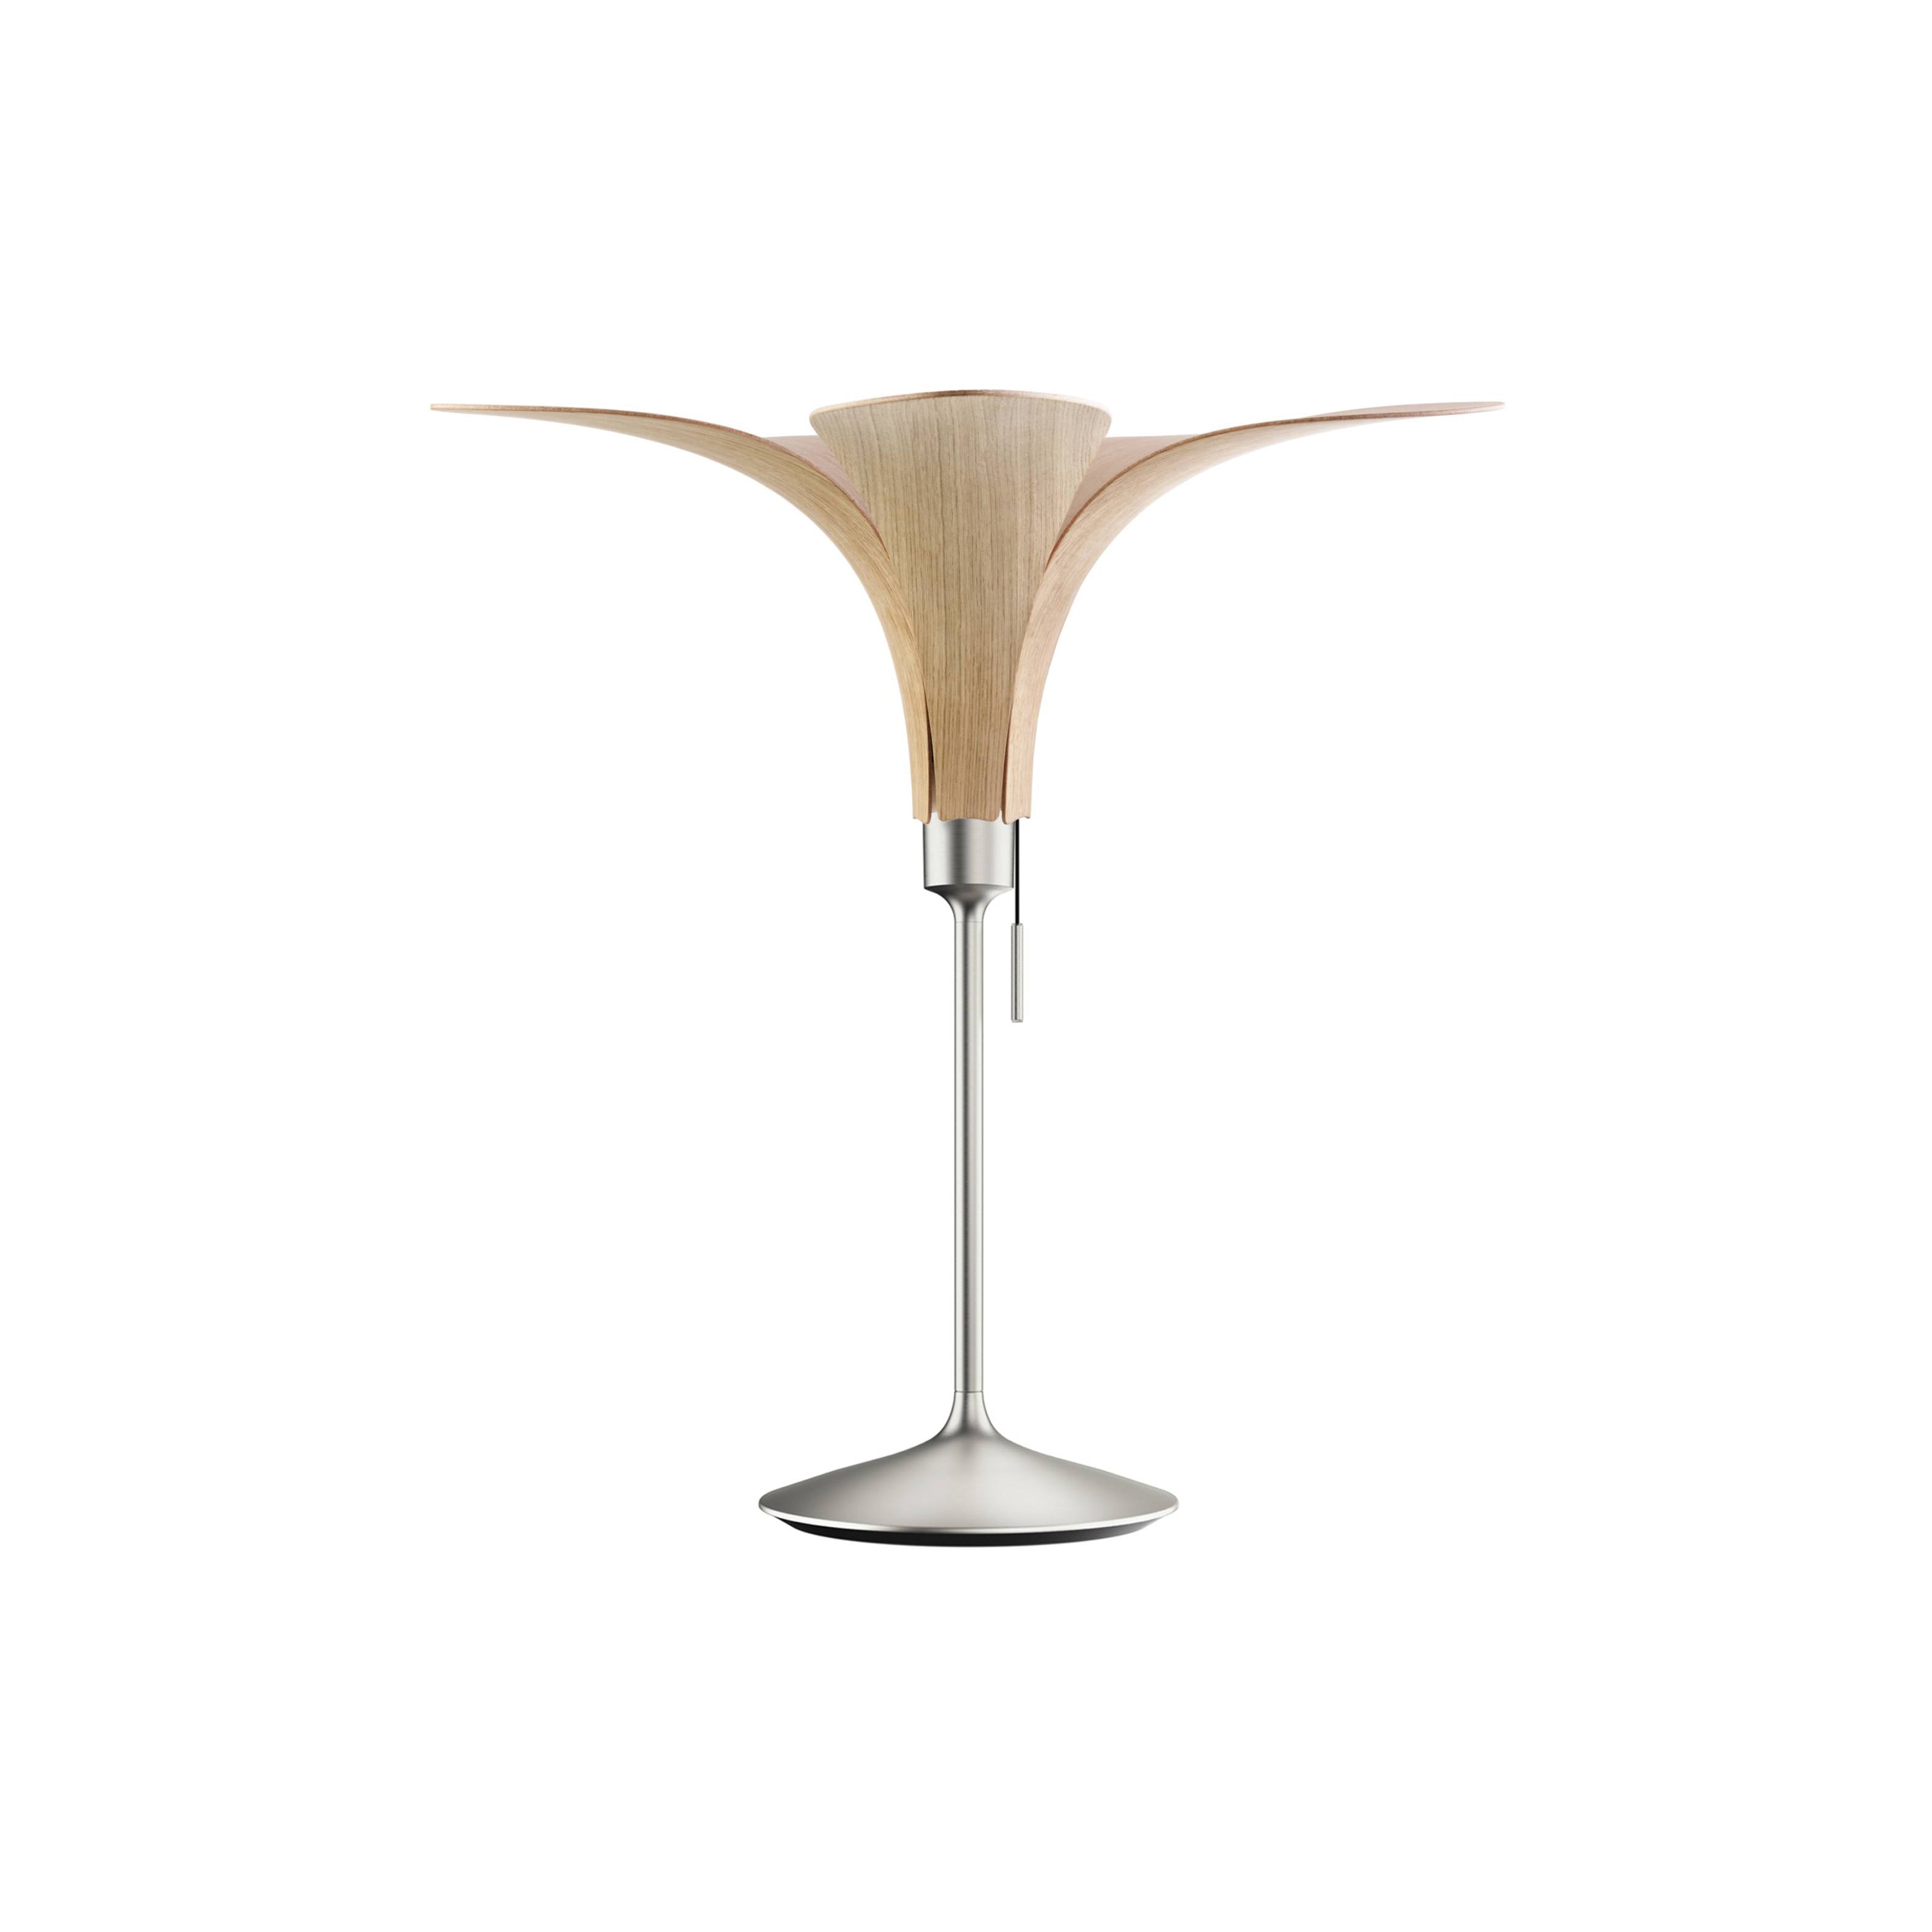 Jazz Champagne Table Lamp: Oak + Brushed Steel